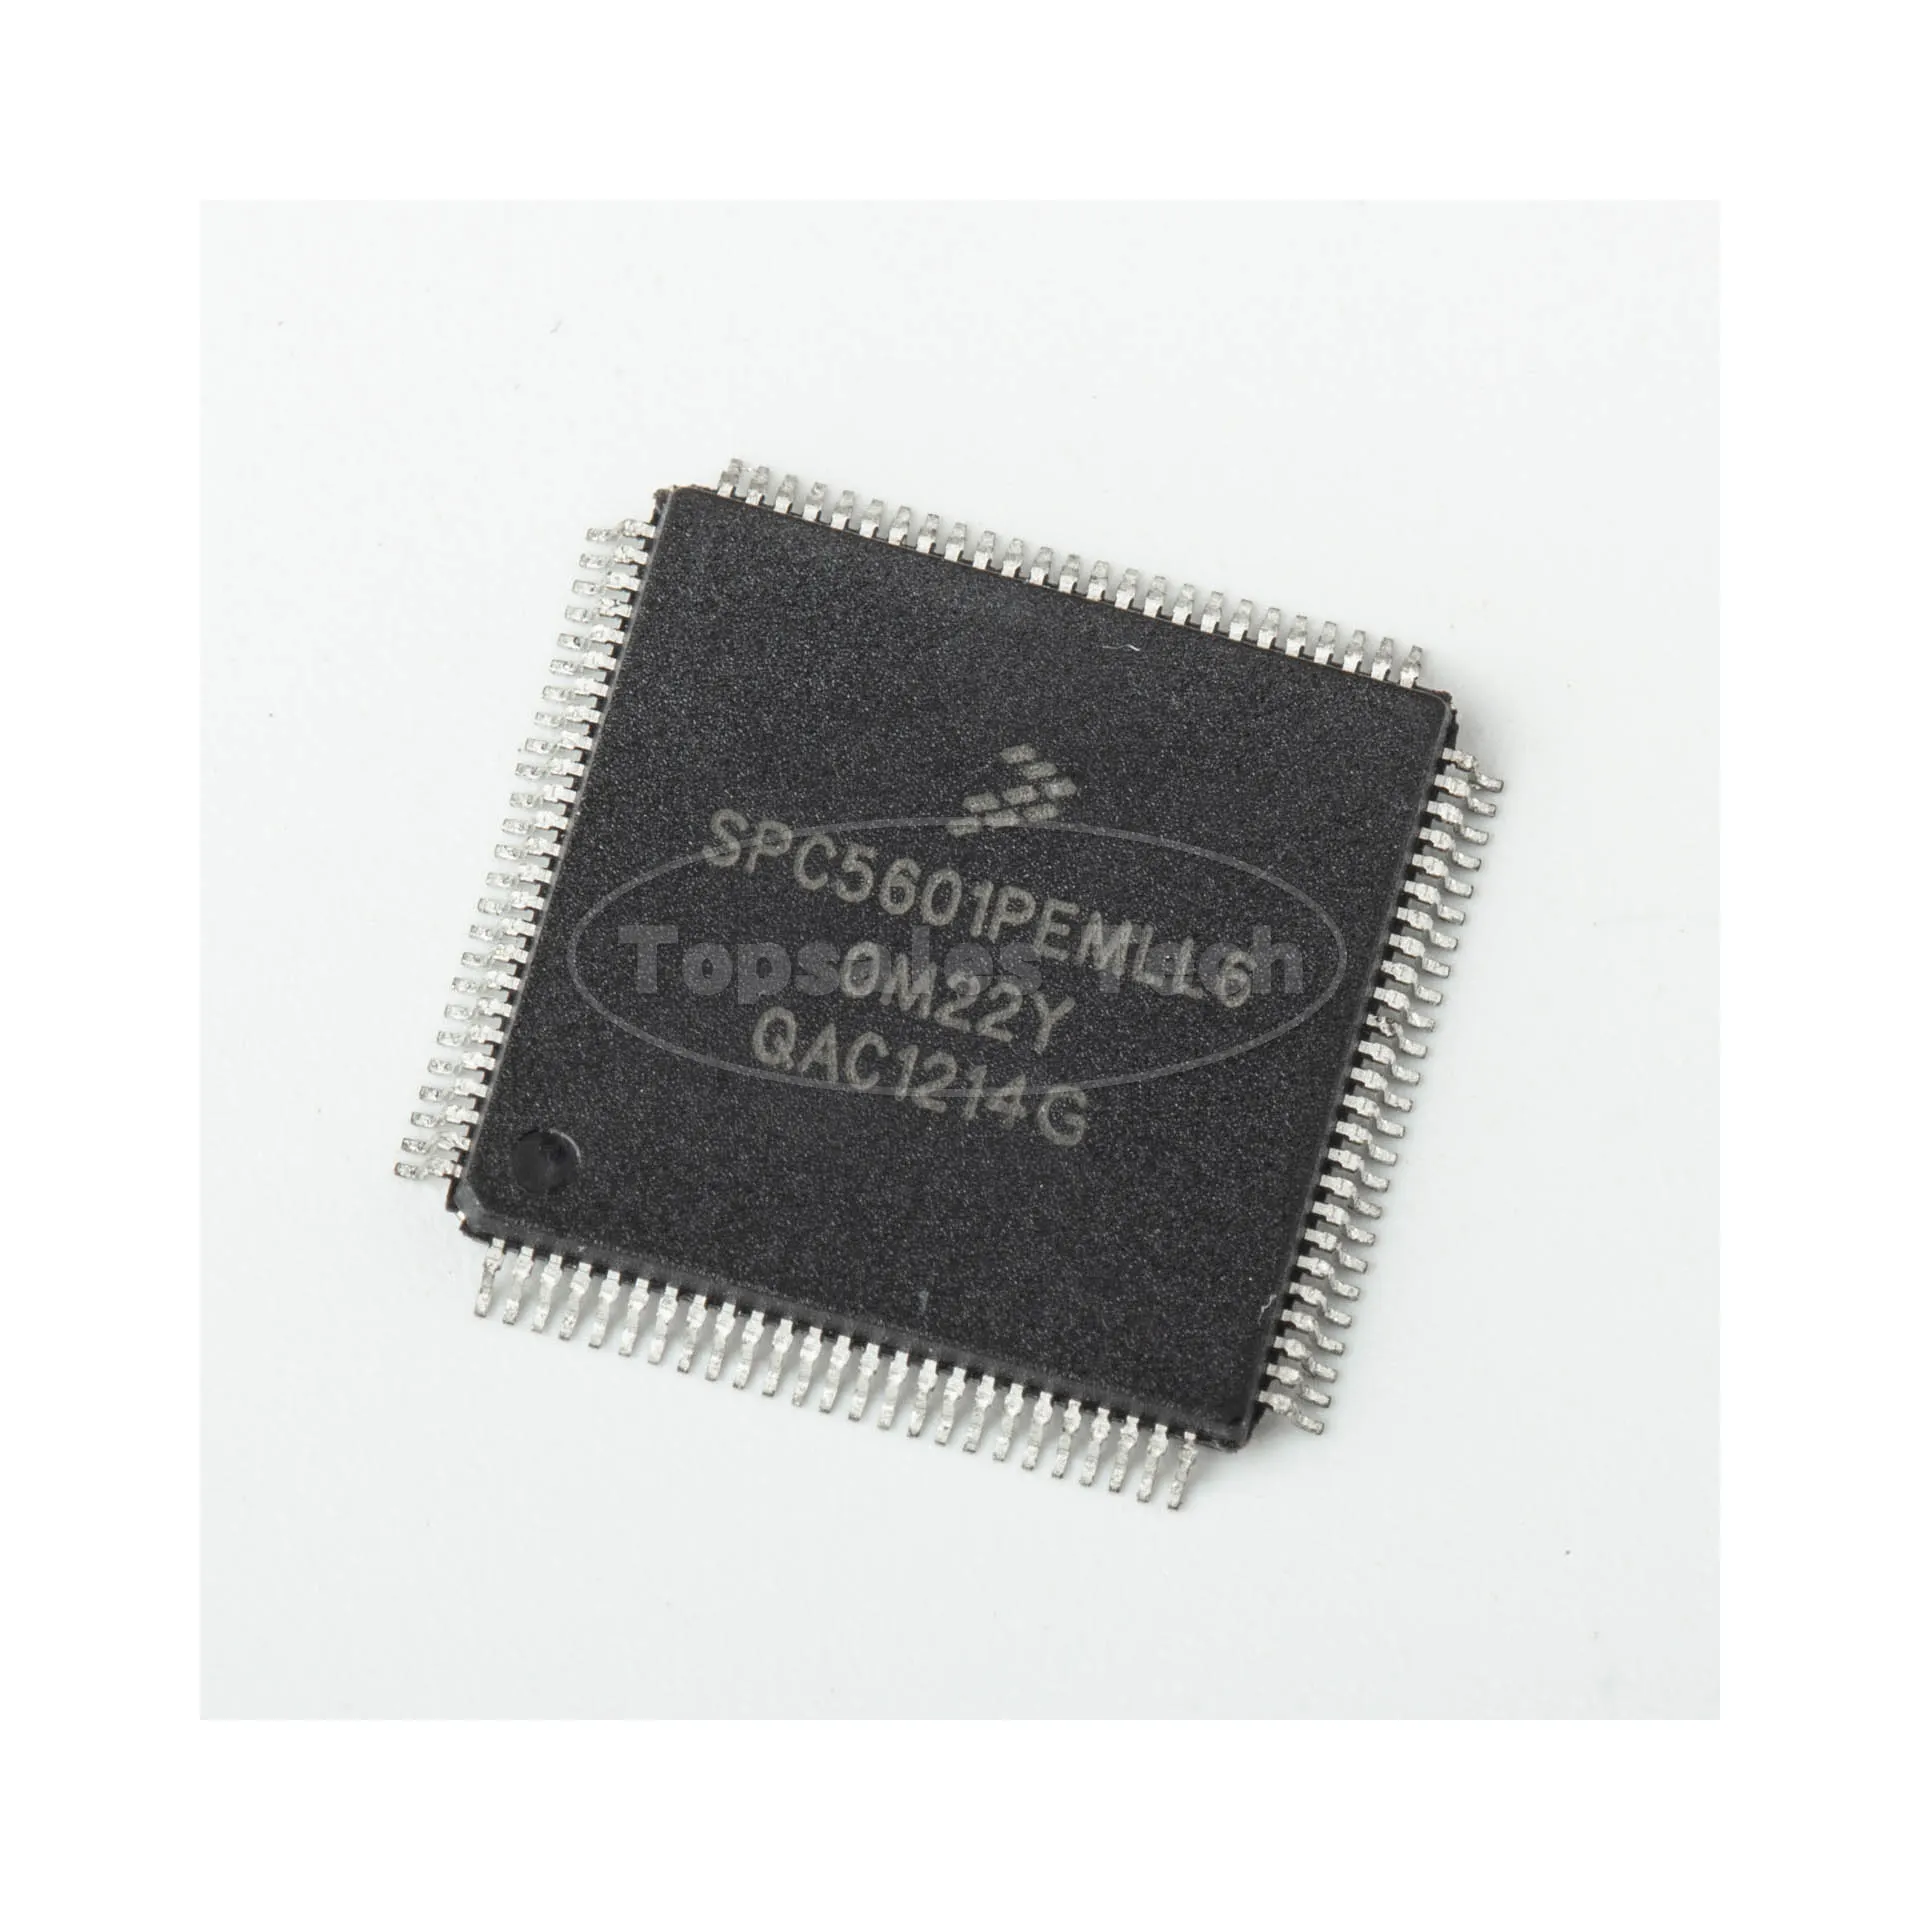 Topsales MCU LQFP-208 LPC54606J512BD208E 집적 회로 IC 칩 FPGA PCB'A arduino raspberry pi 용